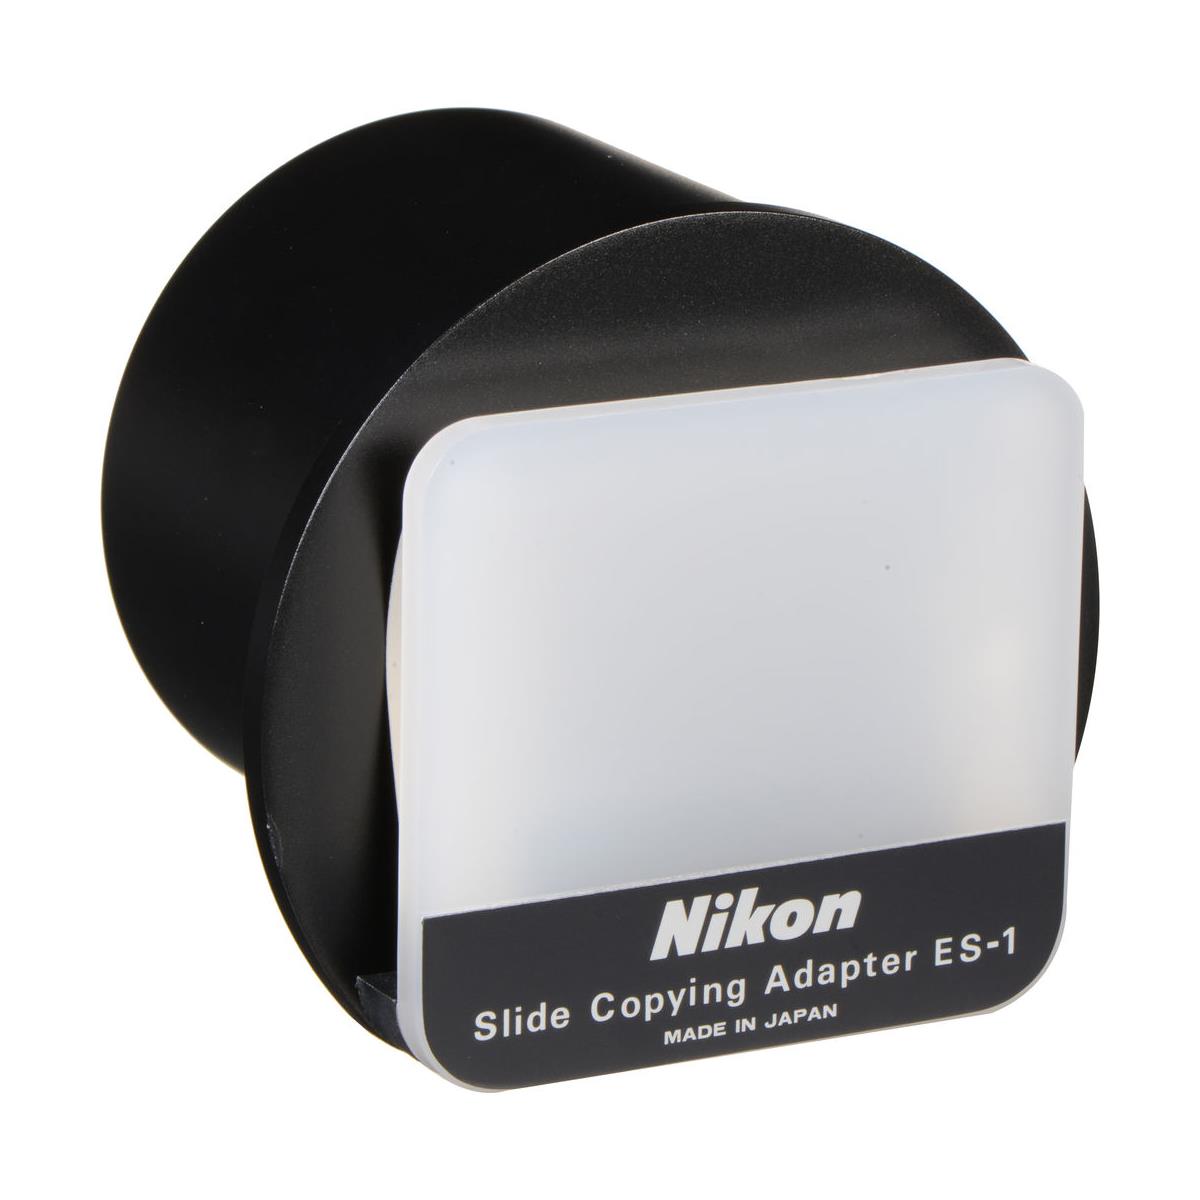 Image of Nikon ES-1 52mm Slide Copy Adapter